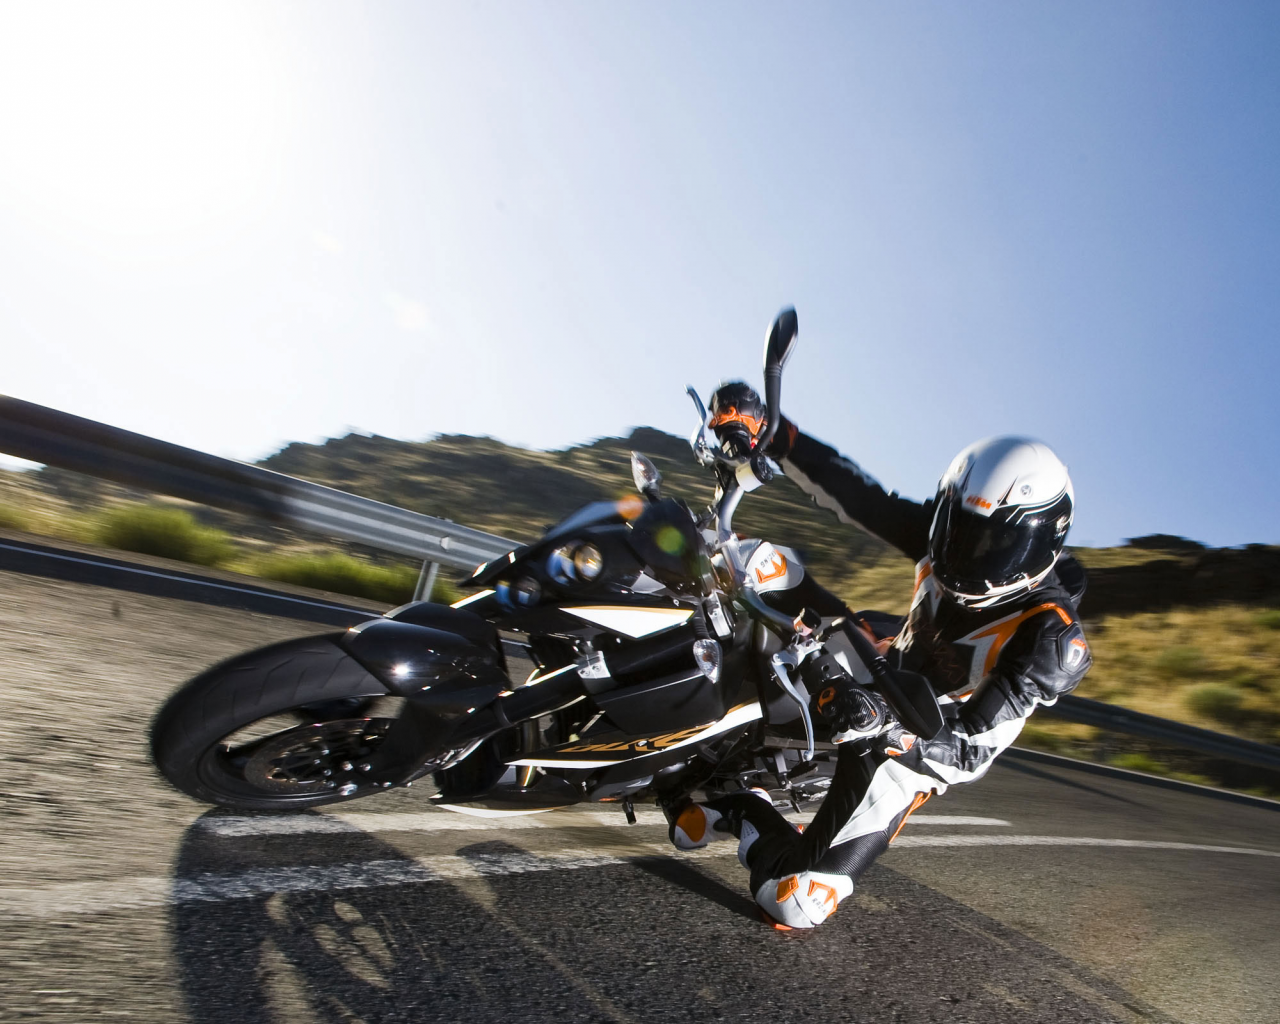 990 Super Duke, motorbike, KTM, Duke, мото, мотоциклы, moto, motorcycle, 990 Super Duke 2011